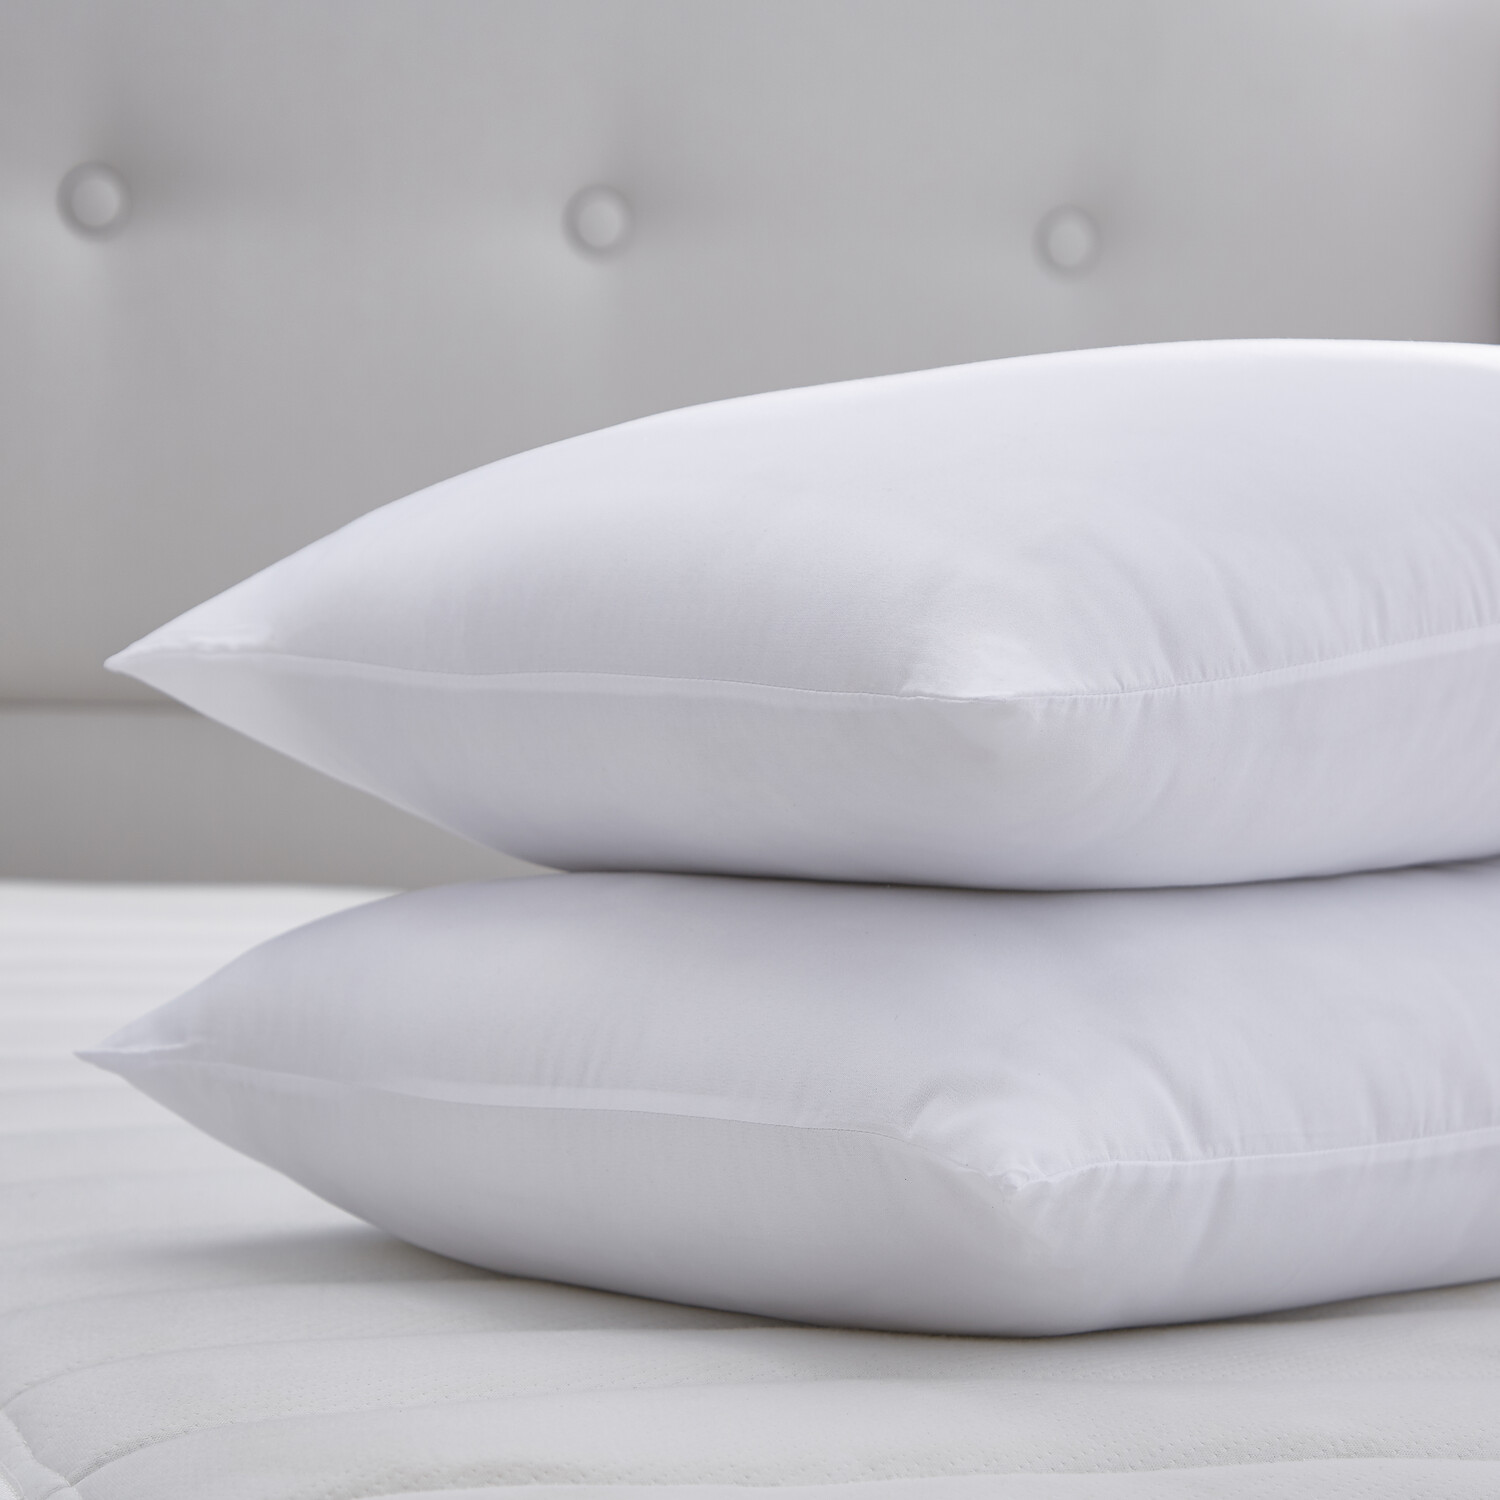 Silentnight White Hollowfibre Pillow 2 Pack Image 5